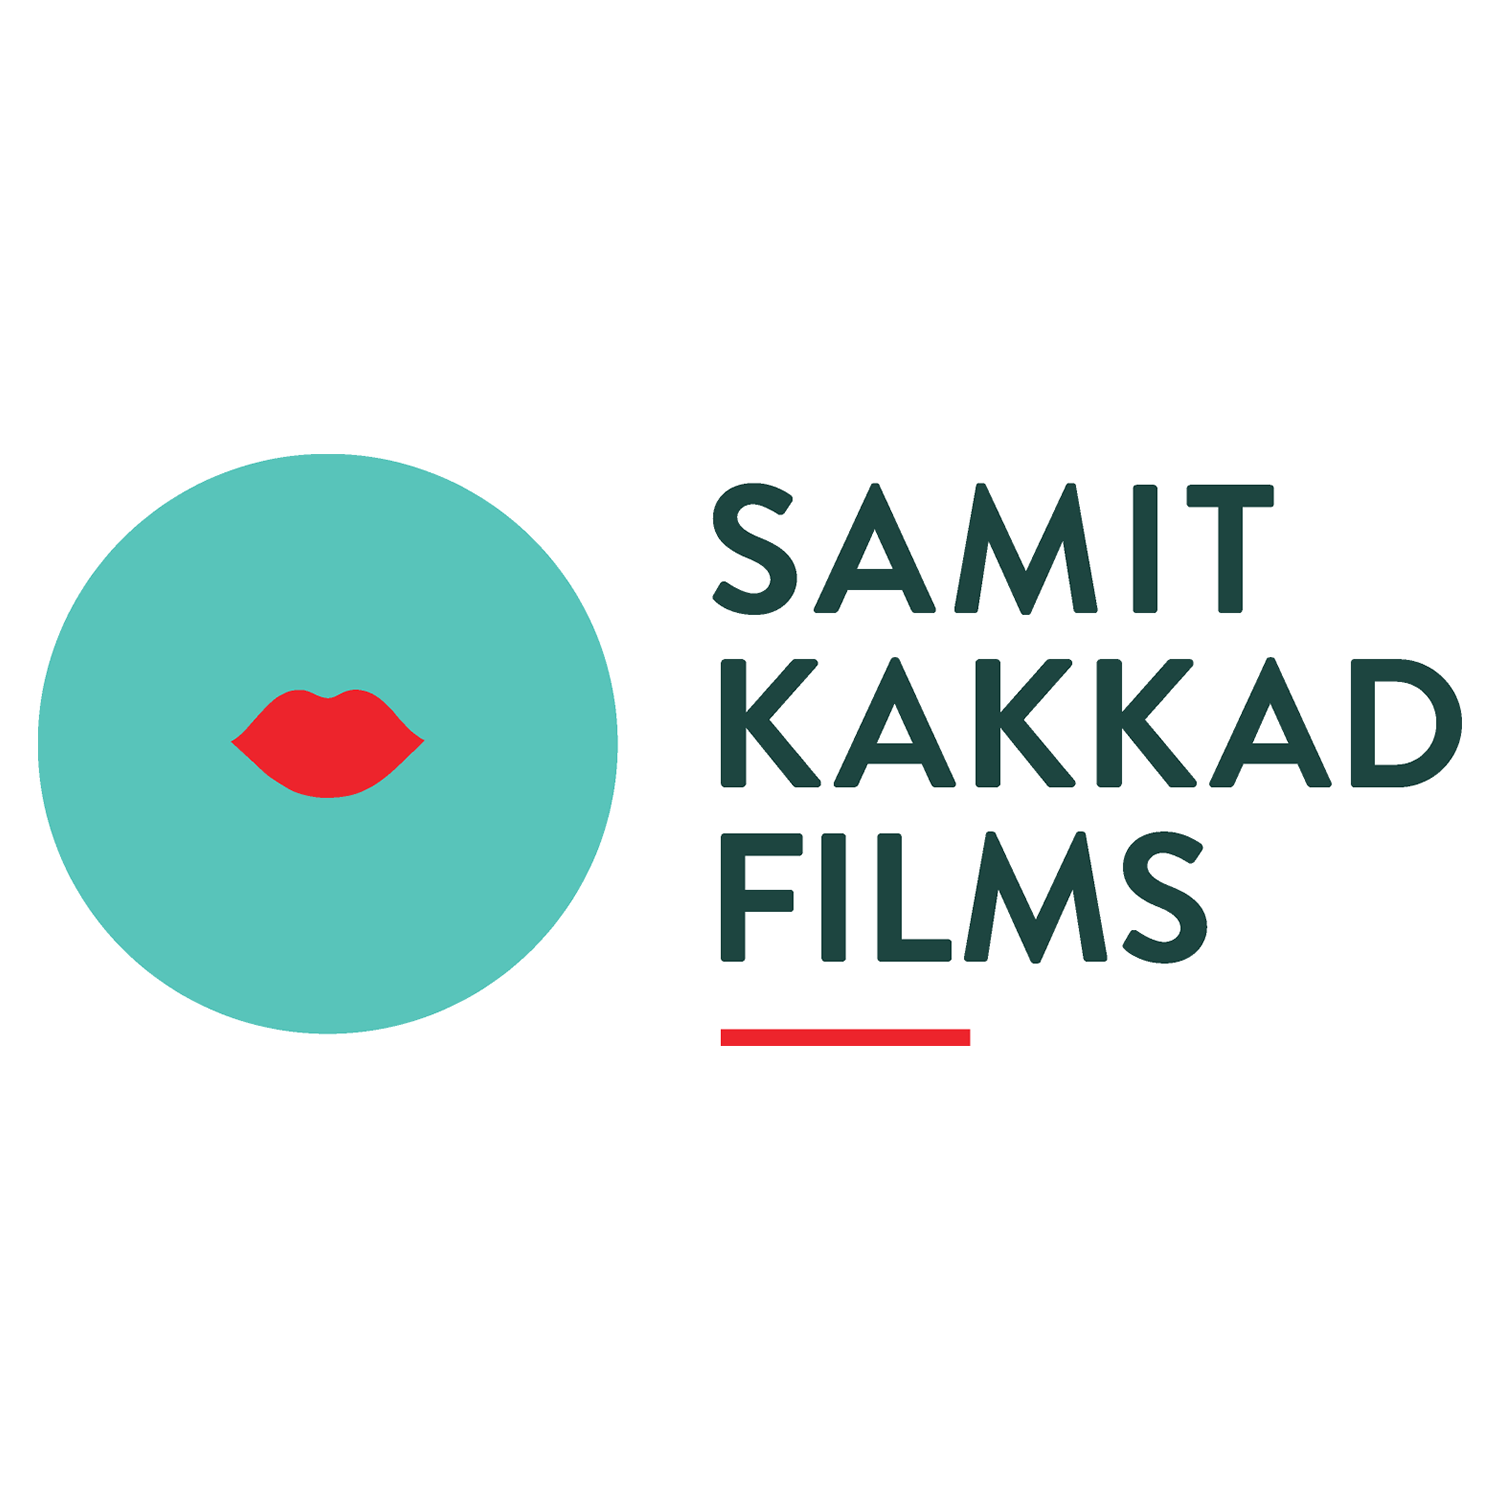 Samit Kakkad Films